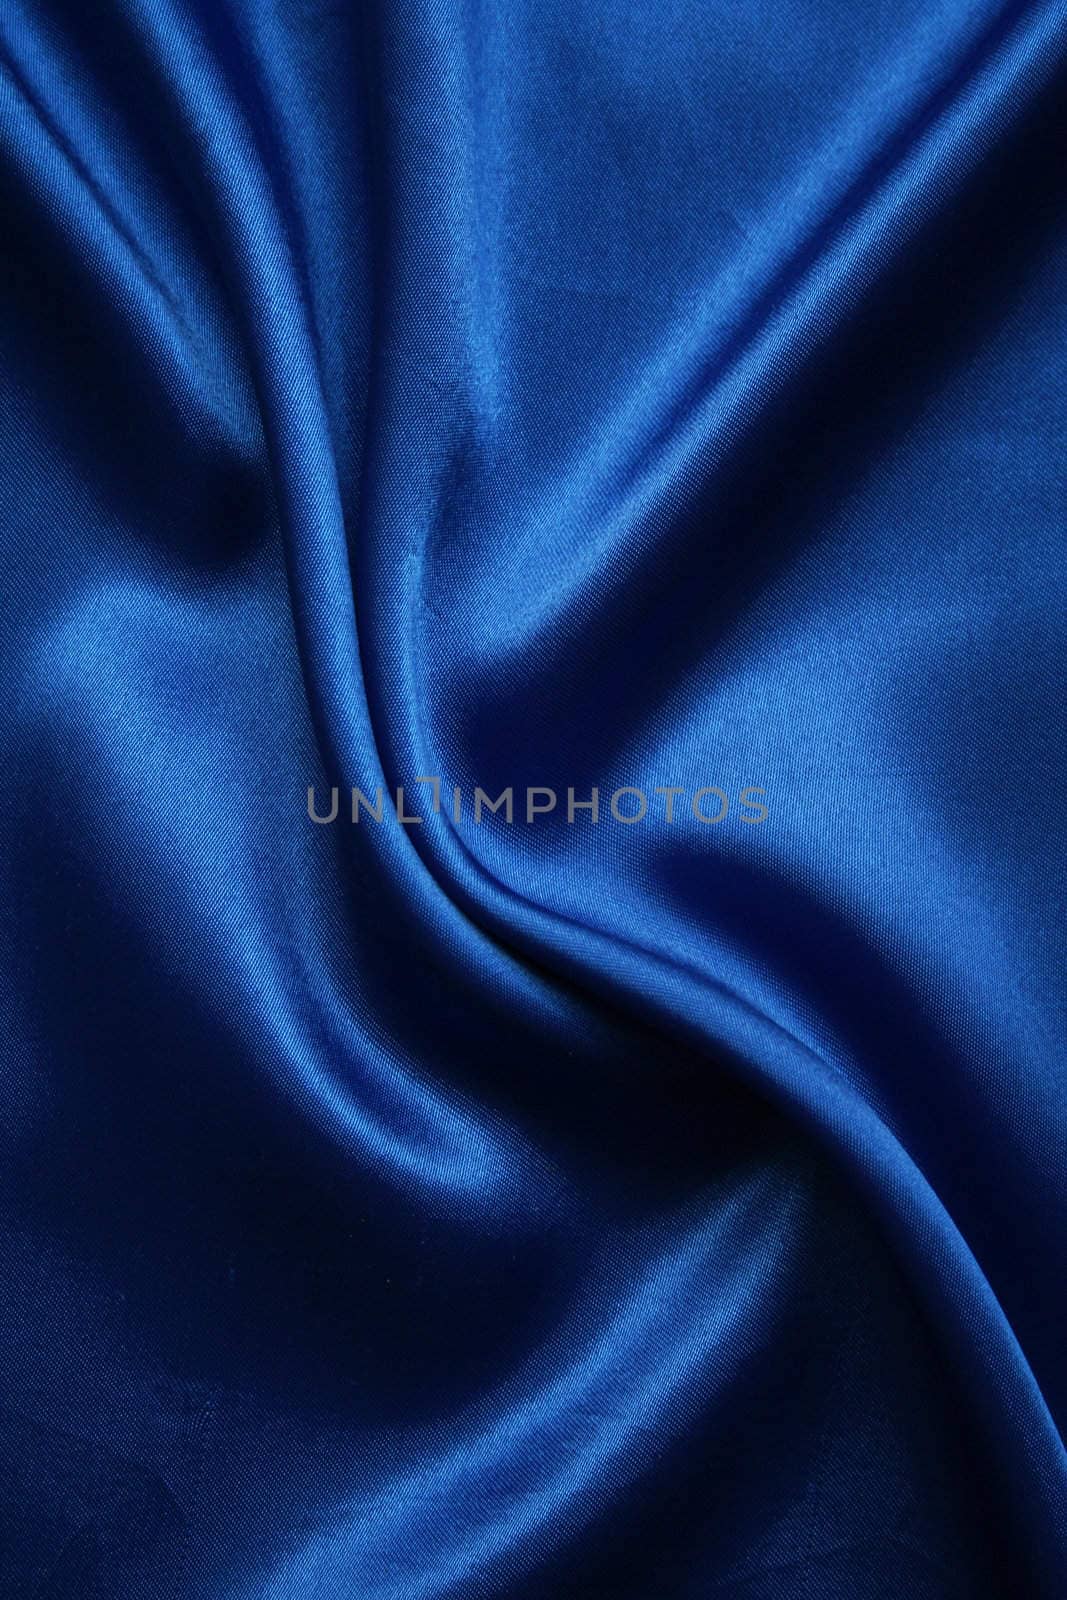 Smooth elegant dark blue silk can use as background 
